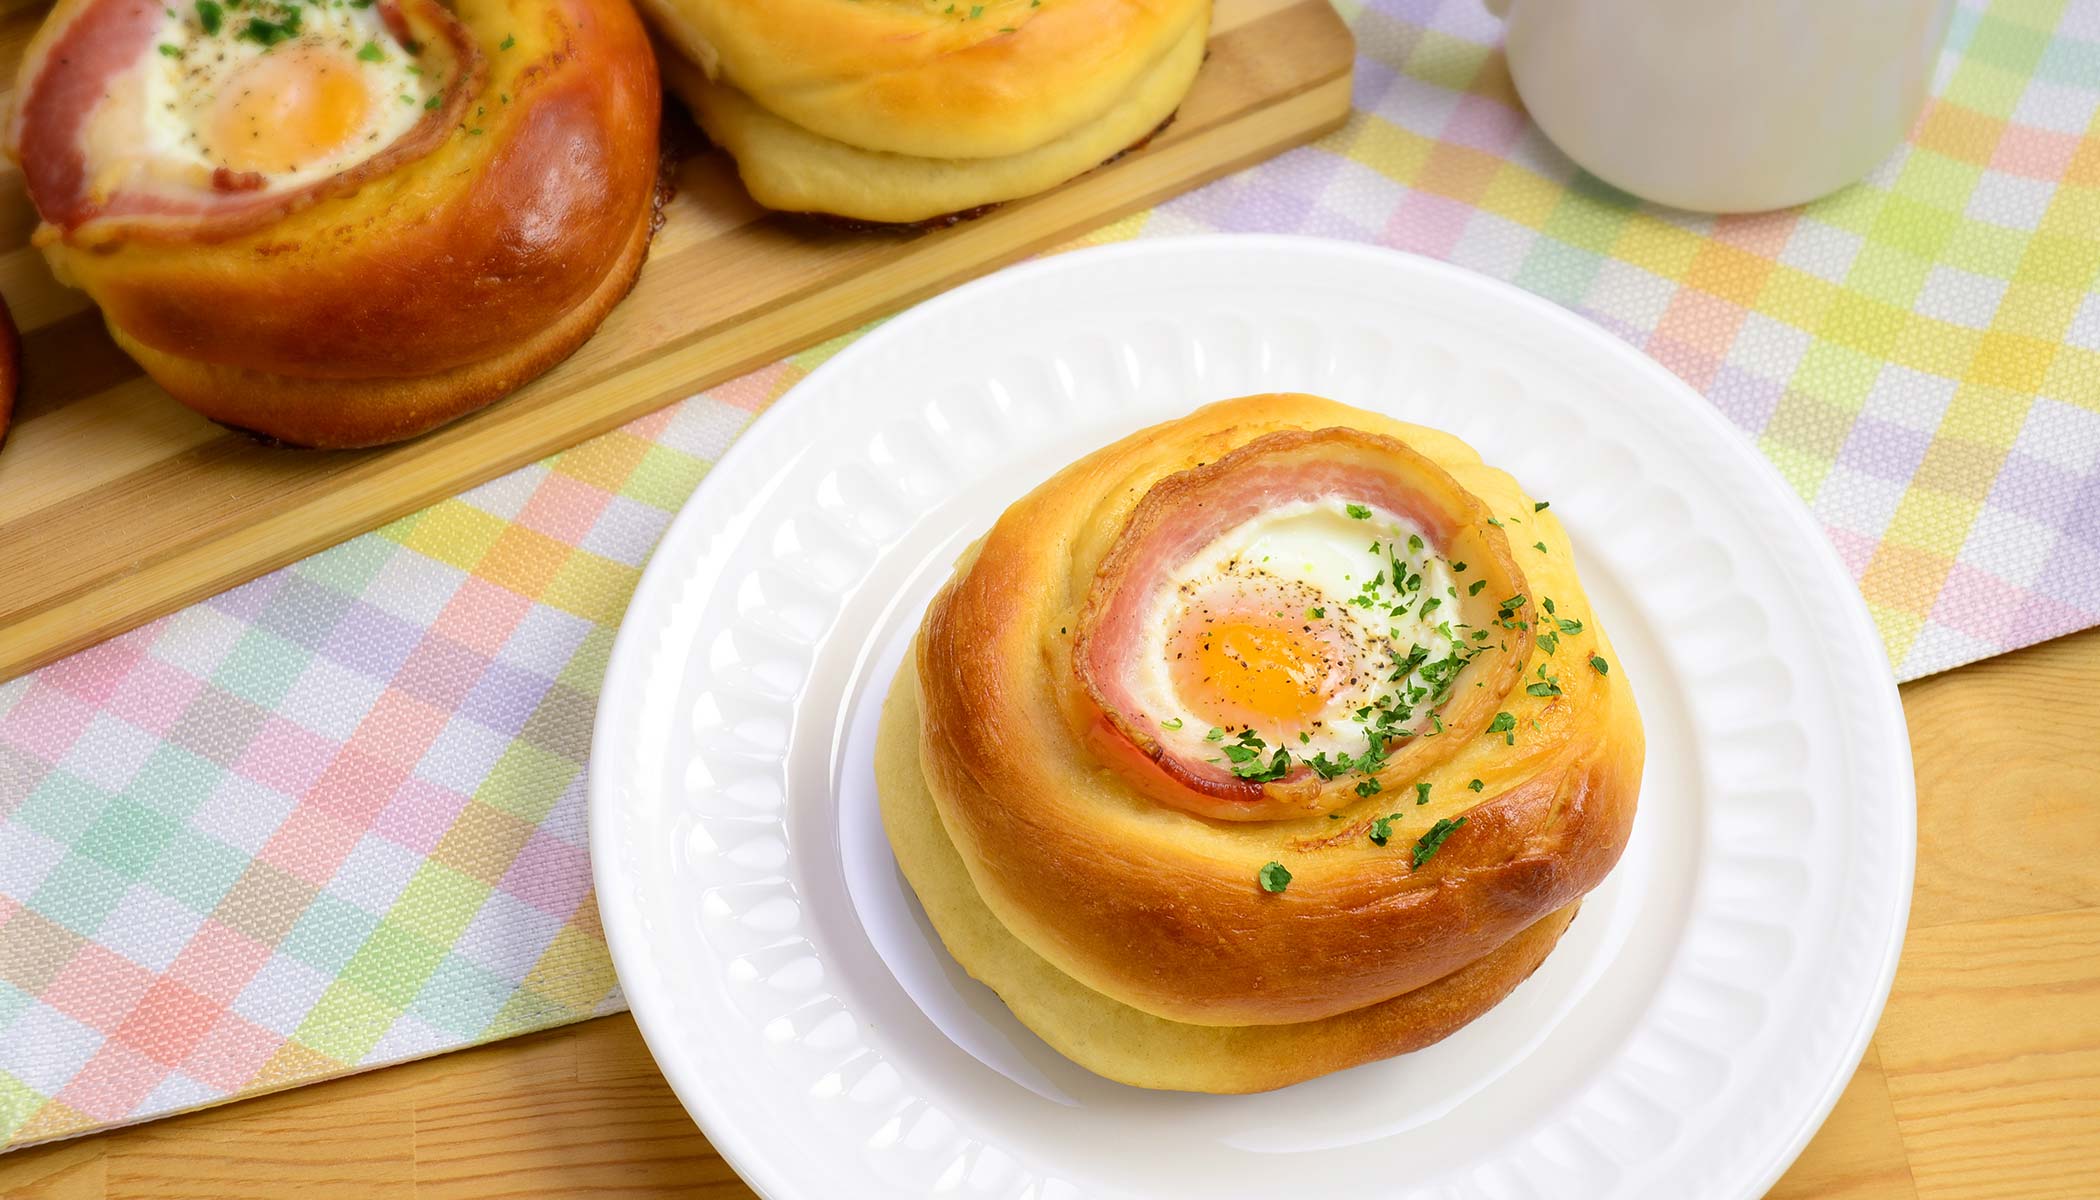 Zojirushi Recipe – Breakfast in Bread (Bacon and Egg Mayo)